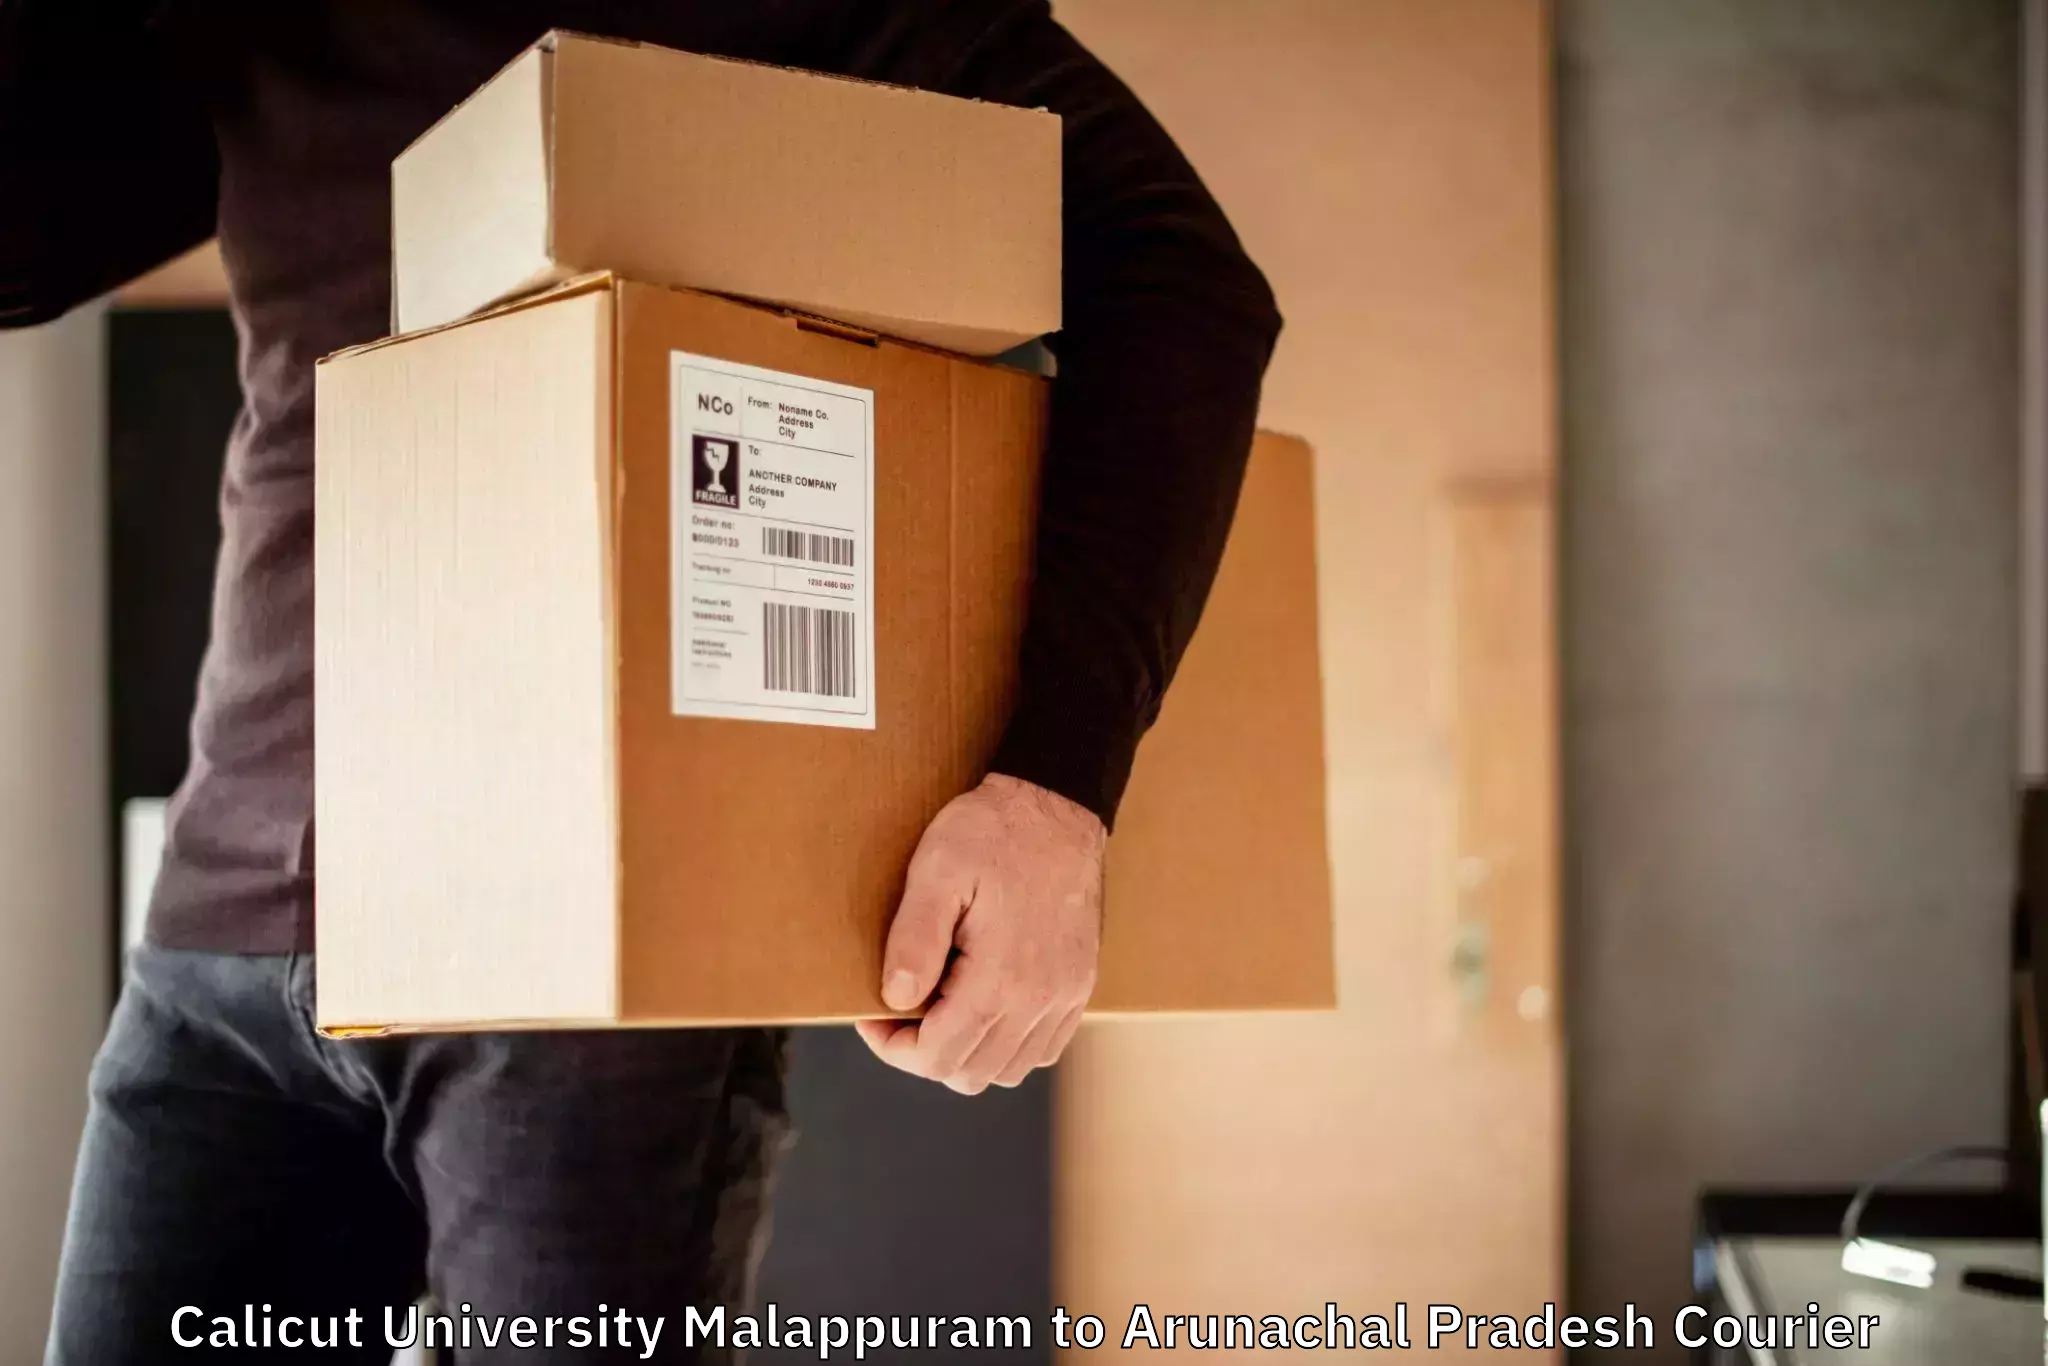 Reliable courier service Calicut University Malappuram to Changlang